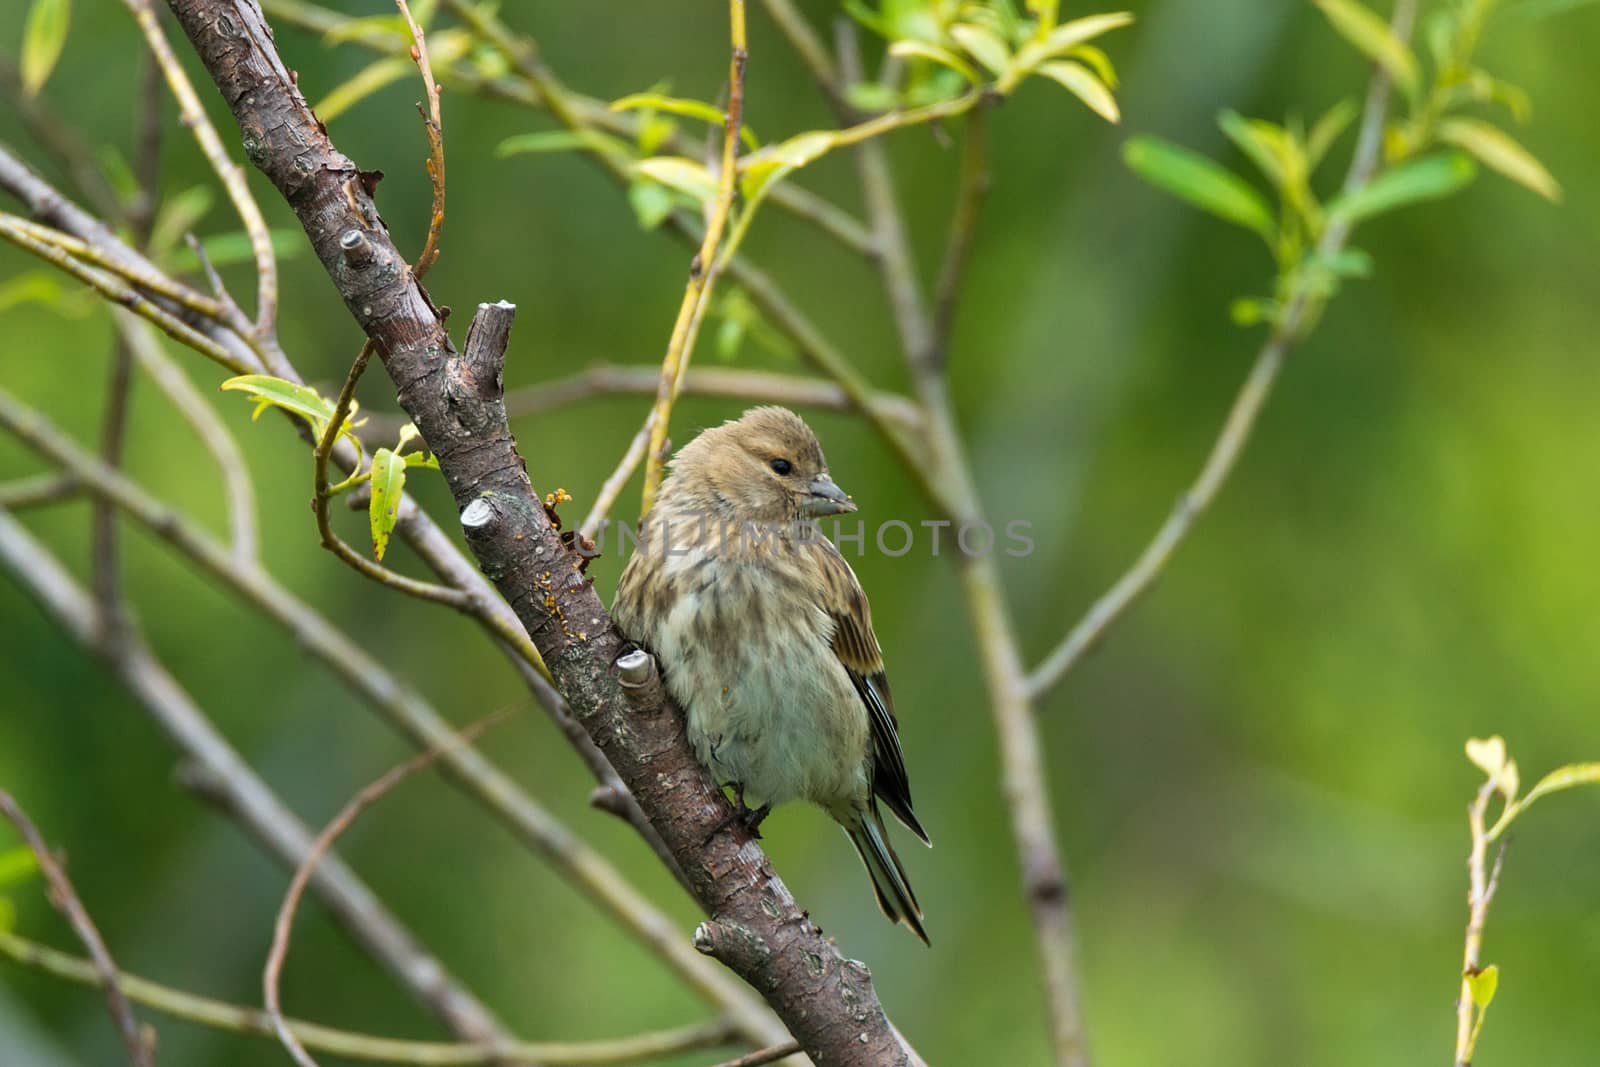 Finch on a branch by AlexBush